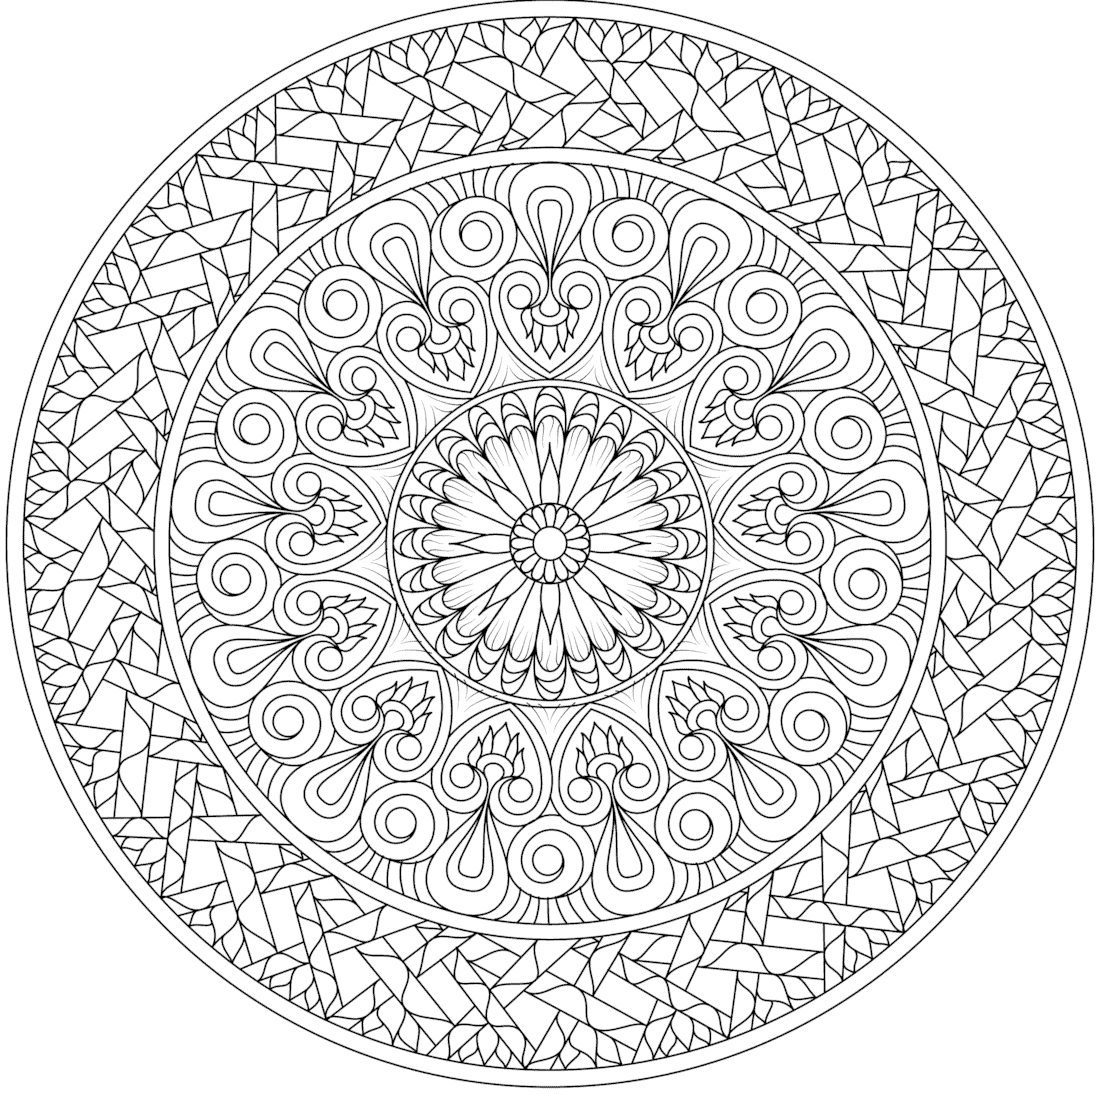 Sunlit Dream Coloring Page - Monday Mandala